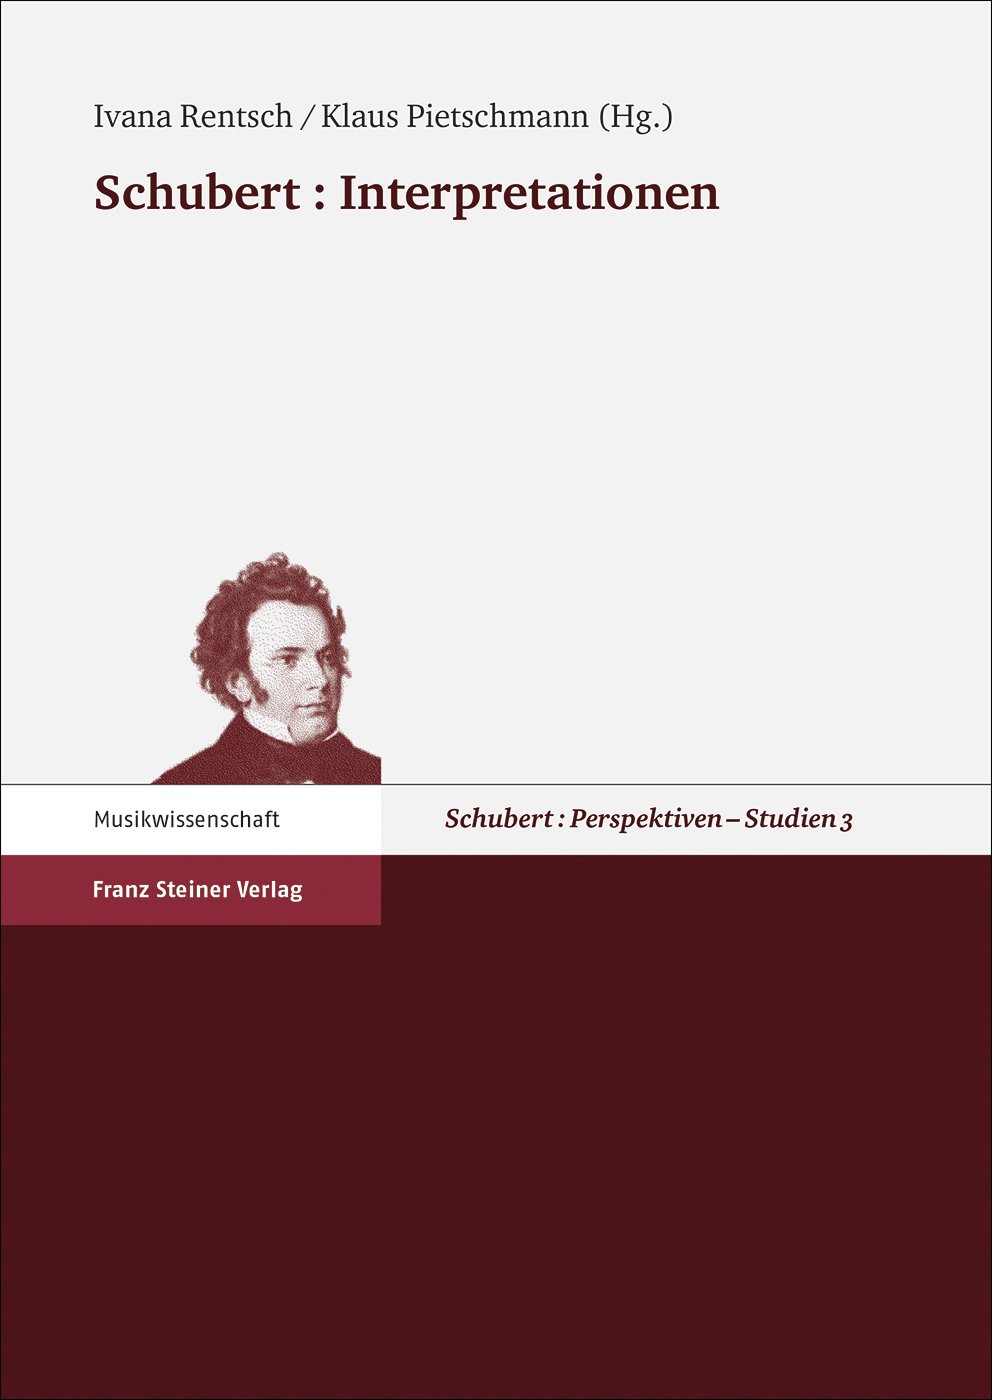 Schubert : Interpretationen